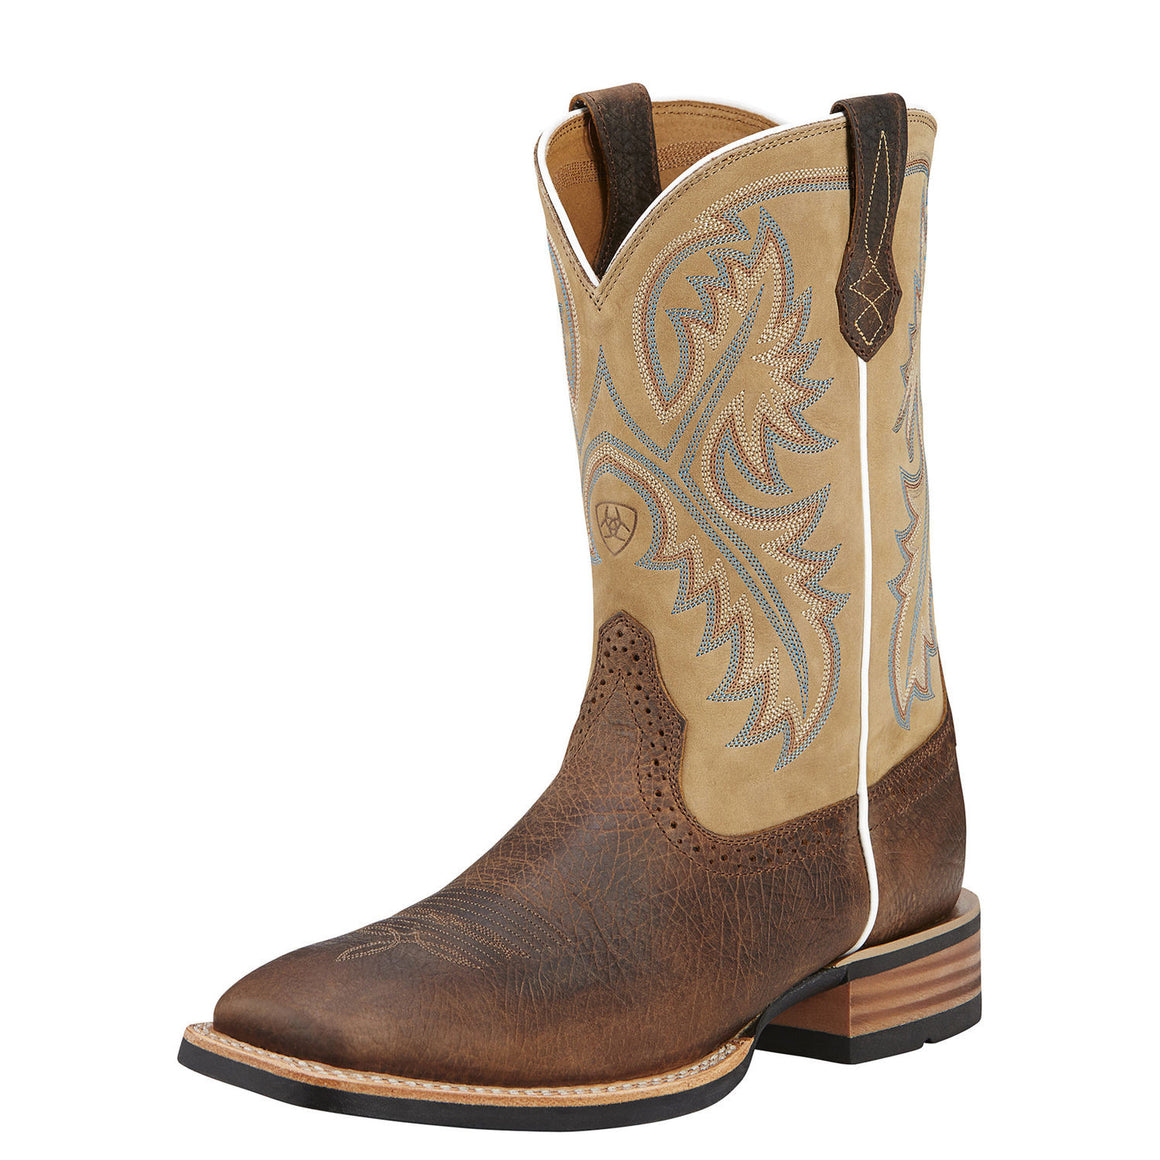 Ariat Men's 11" Quickdraw Western Boots - Tumbled Bark/Beige 10002224 - ShoeShackOnline